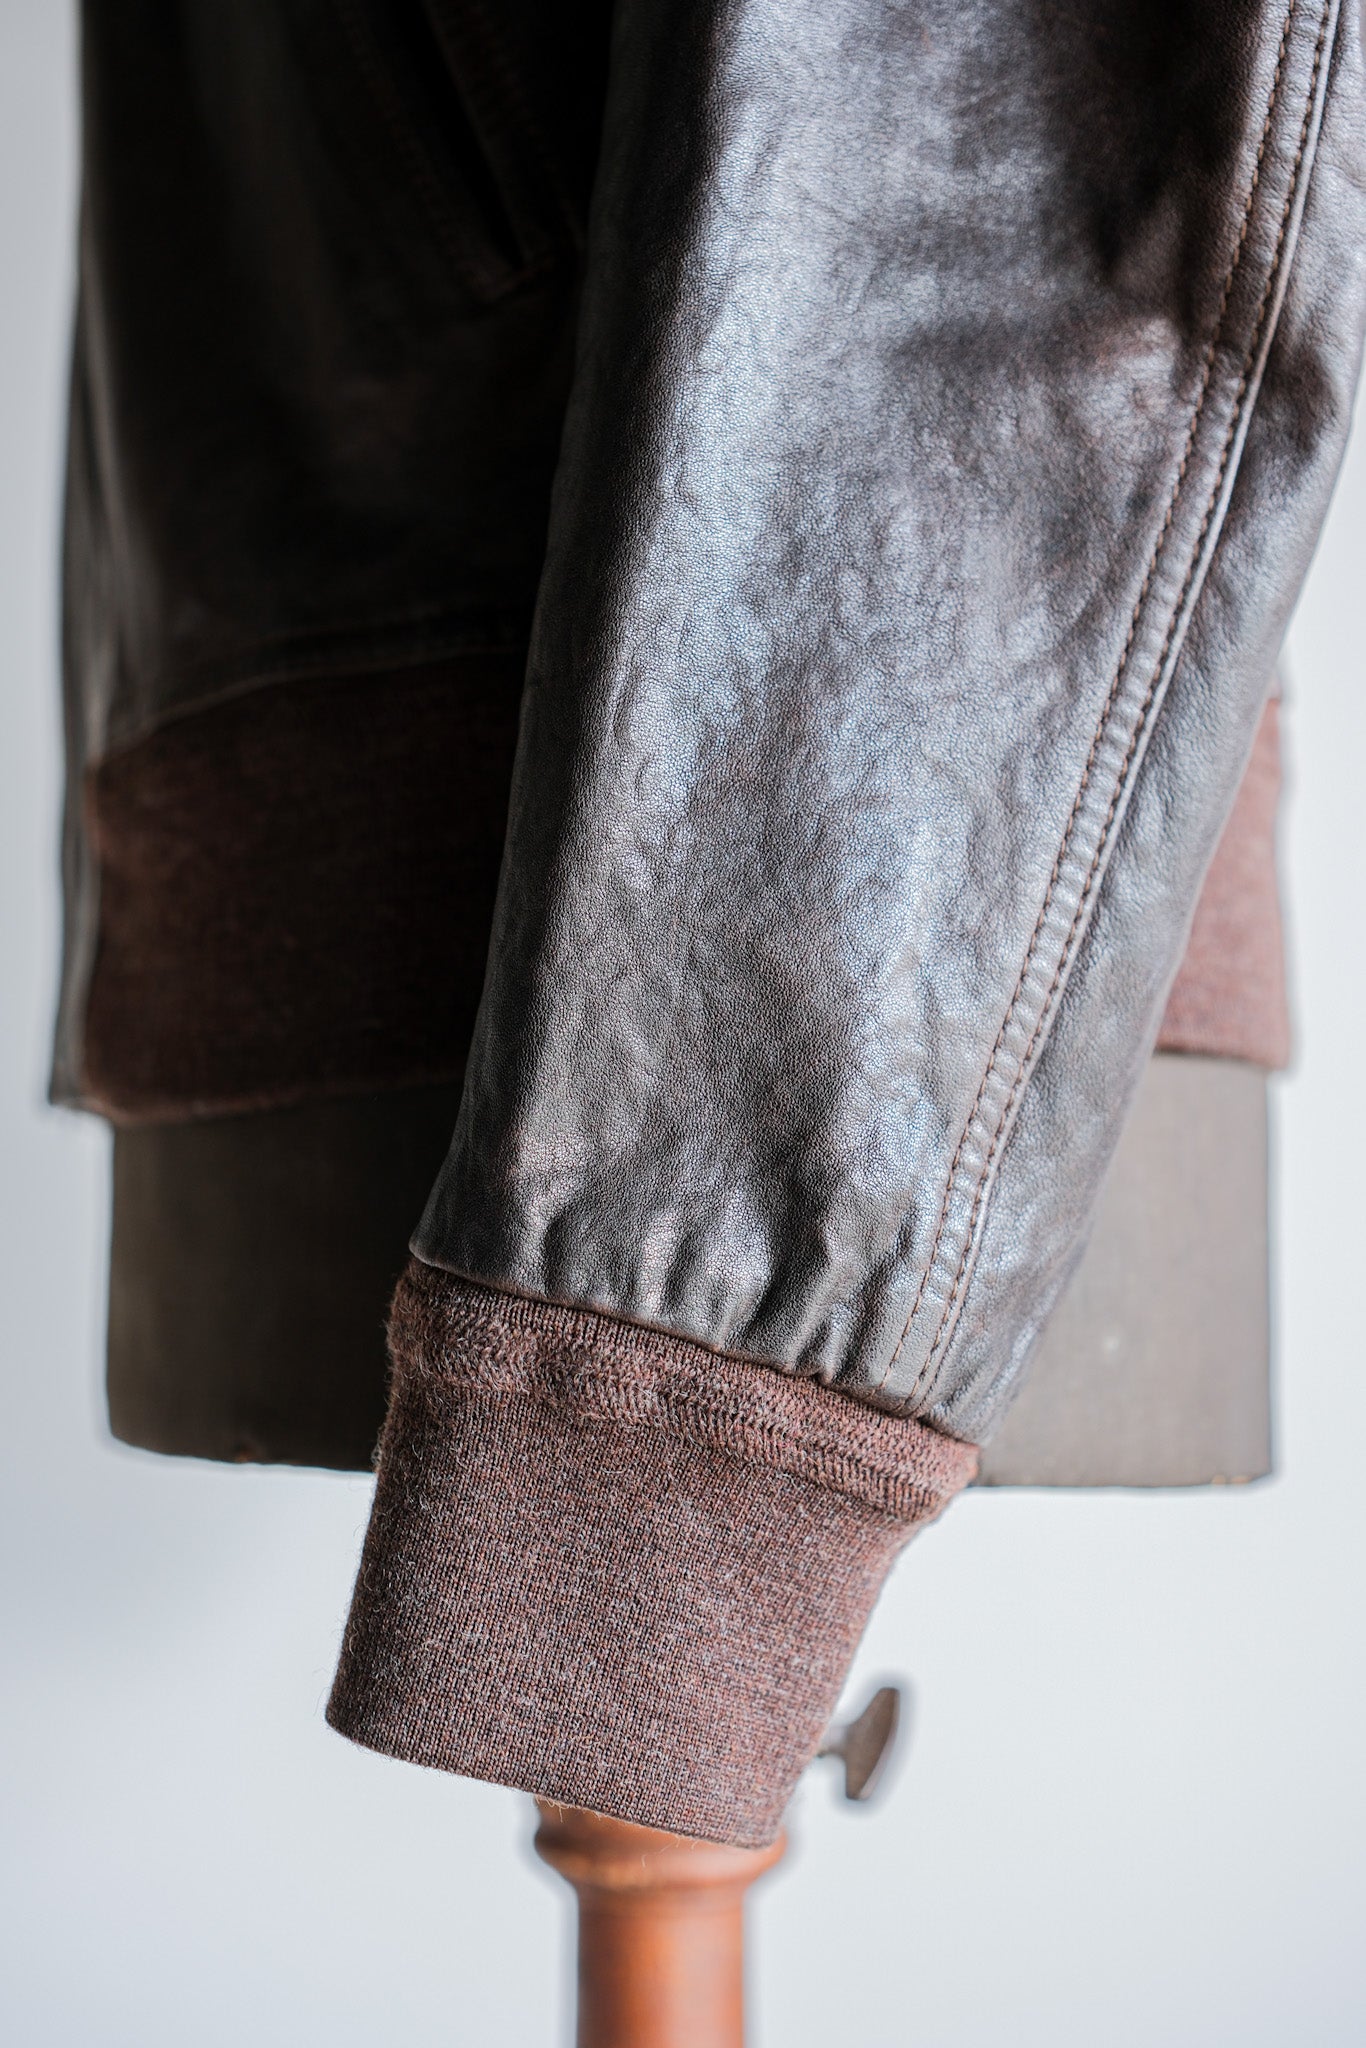 [~2010's] Old PRADA LINEA ROSSA Brown Leather Blouson Size.48 "PRADA SPORT"